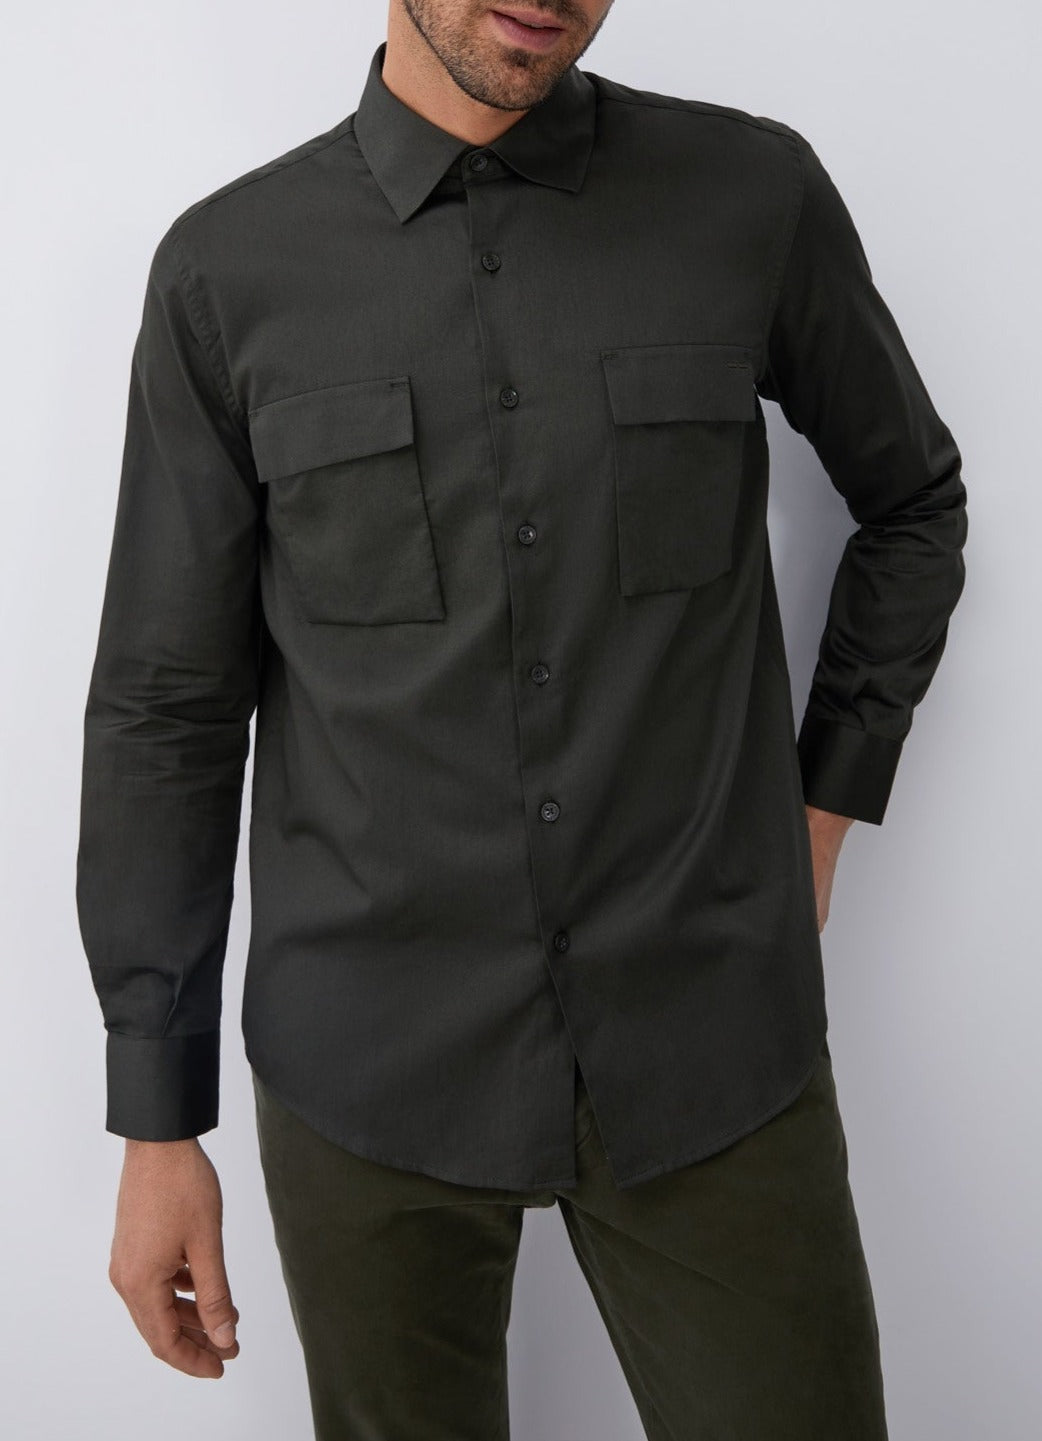 Men Shirt | Green Cotton Shirt With Chest Pockets by Spanish designer Adolfo Dominguez